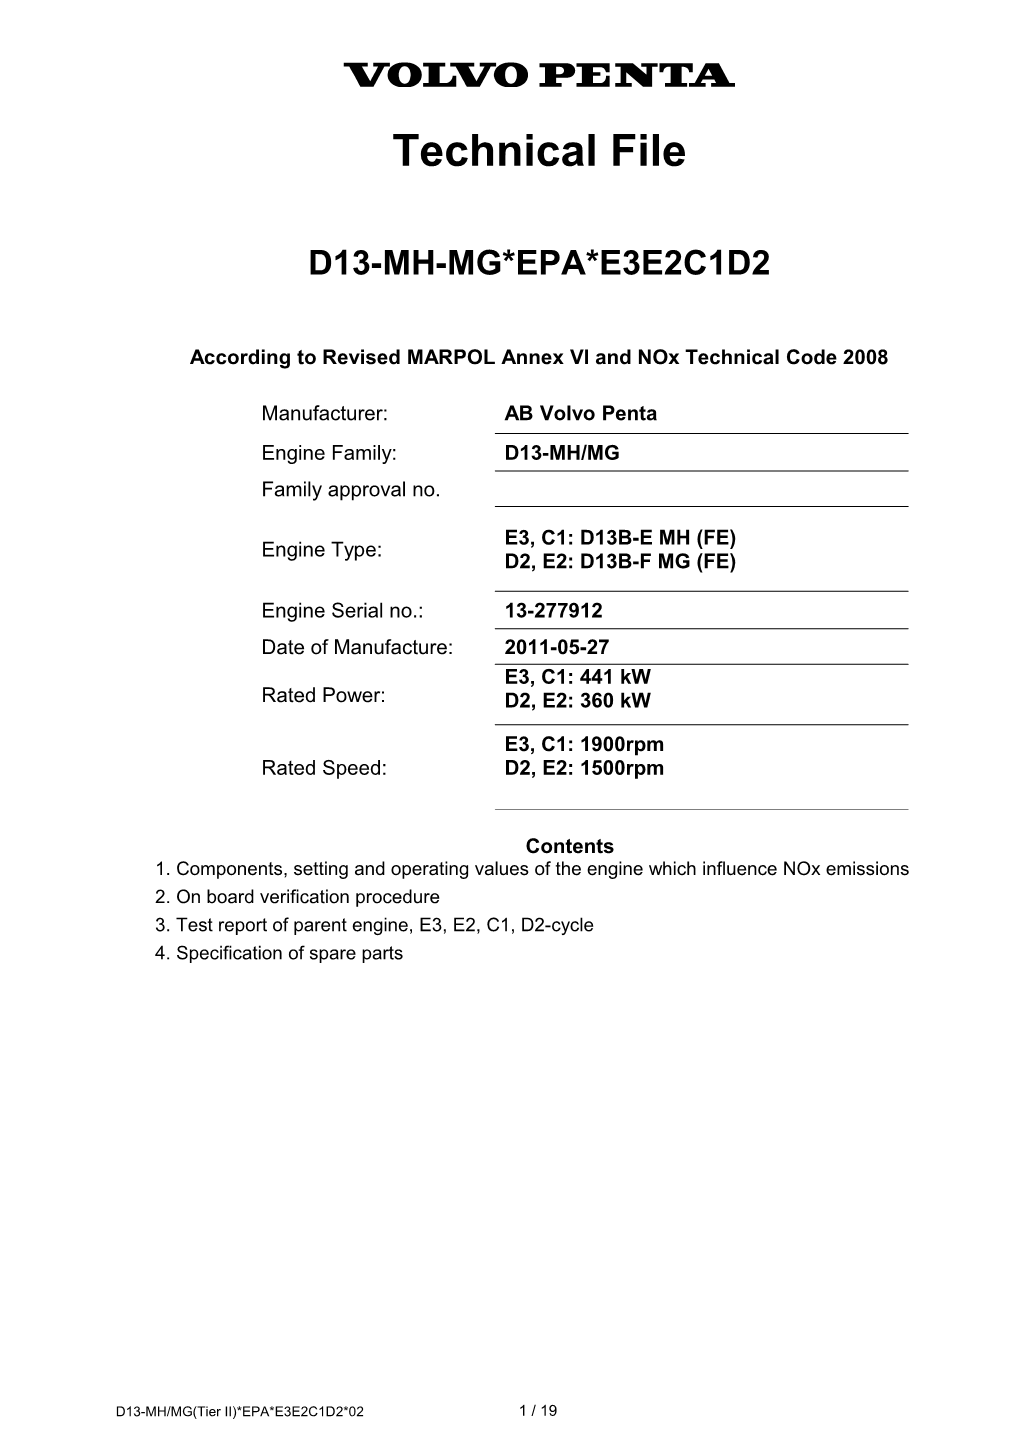 Technical File D13-MH-MG(Tierii)-EPA-E3E2C1D2-02